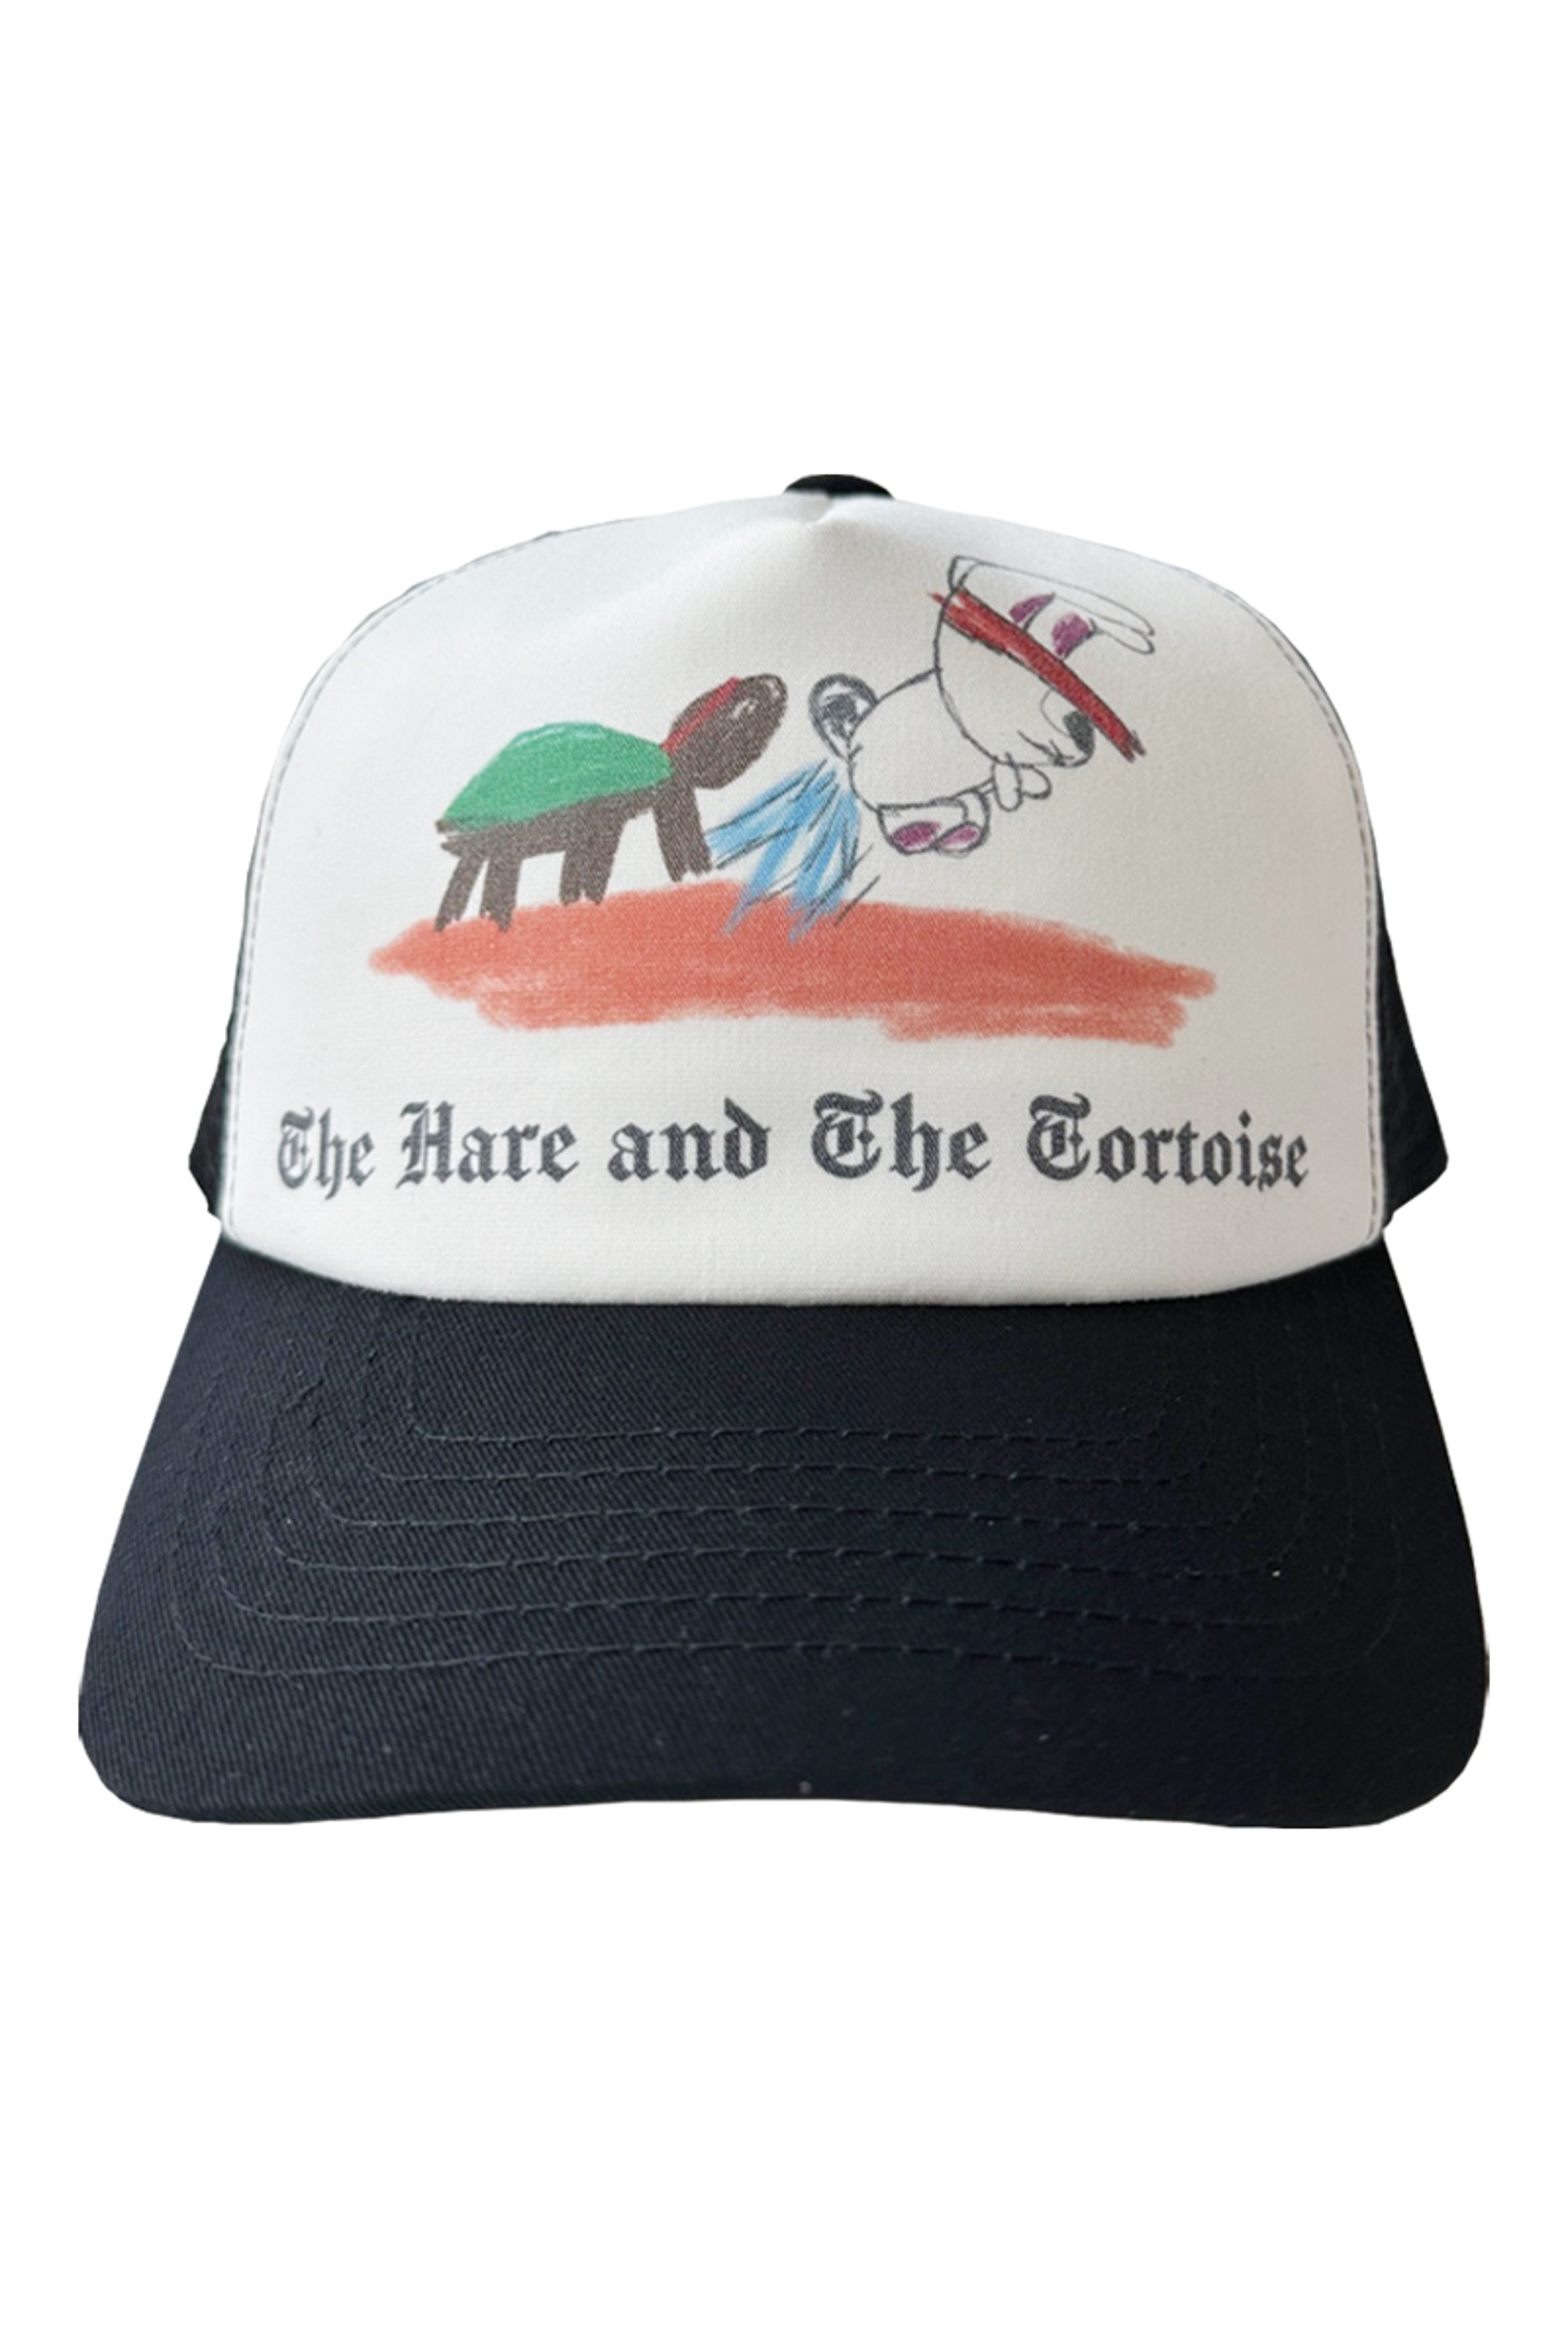 The Hare and Tortoise Trucker Cap Black